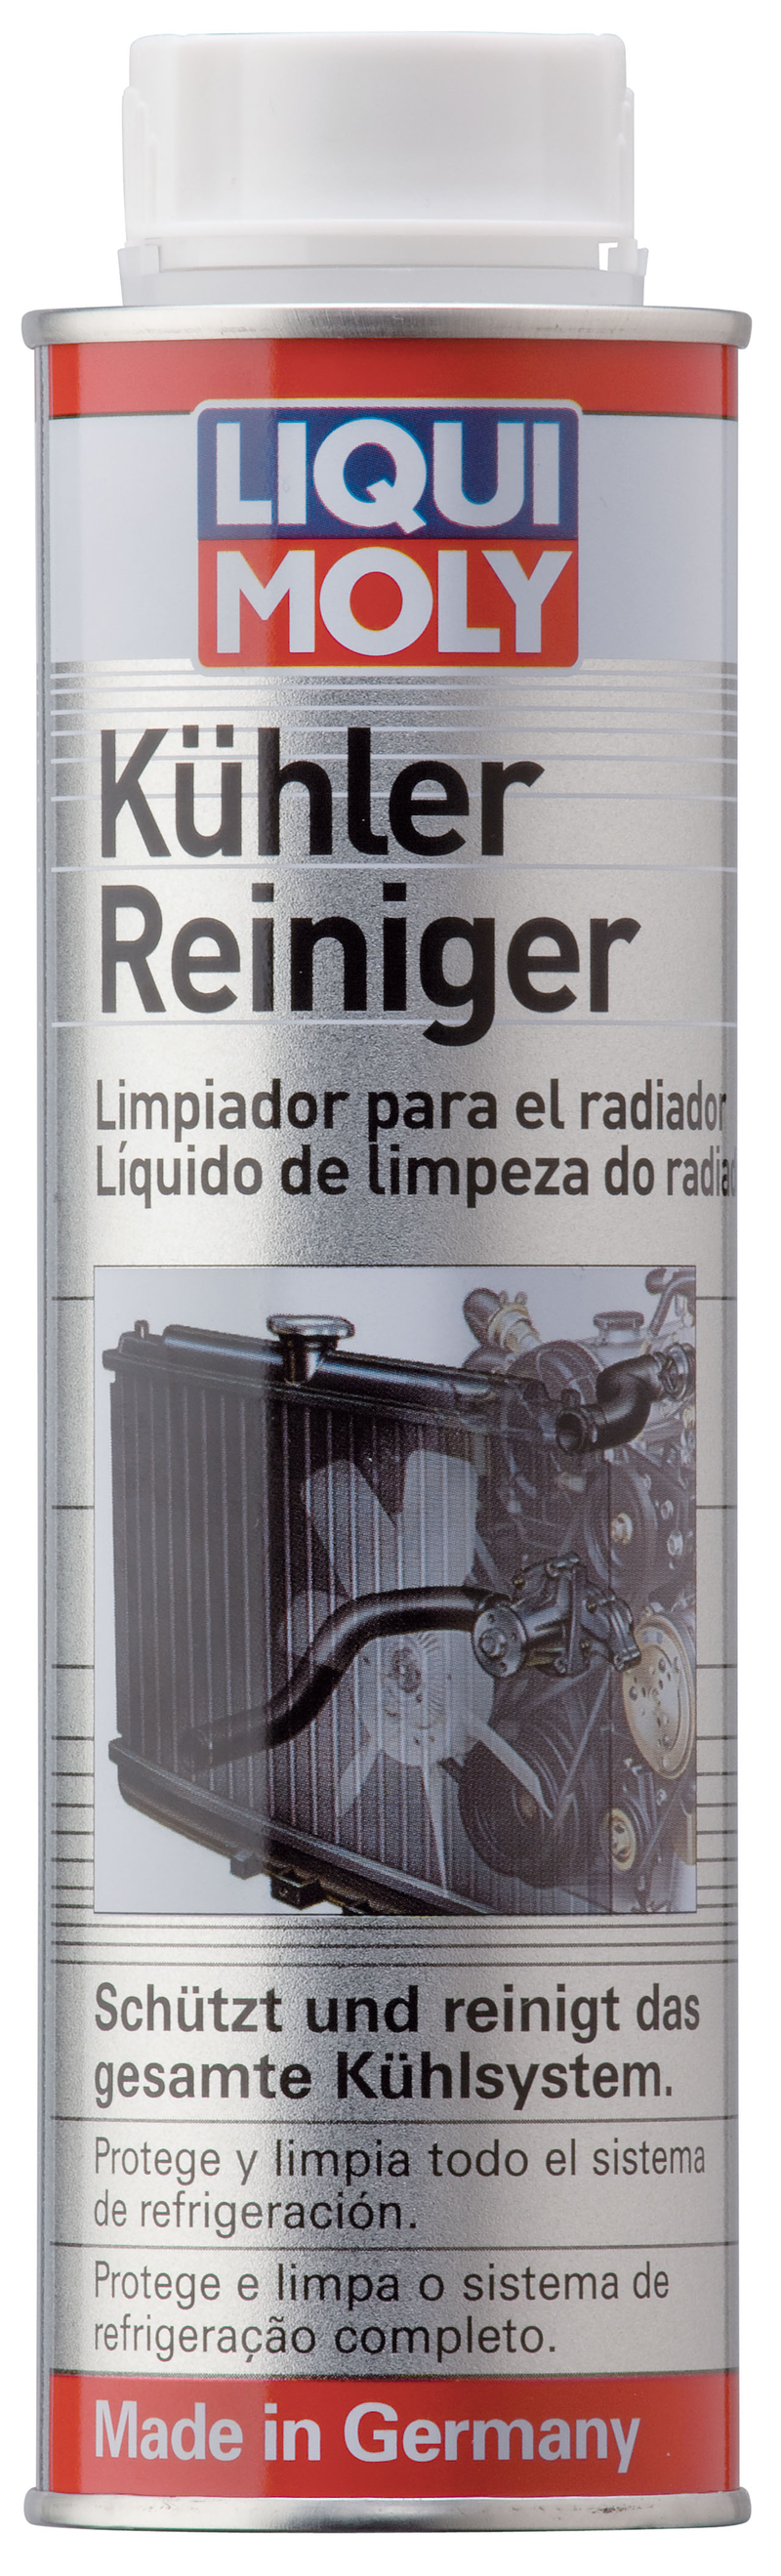 Limpiador para el radiador (300 ML) Liqui Moly